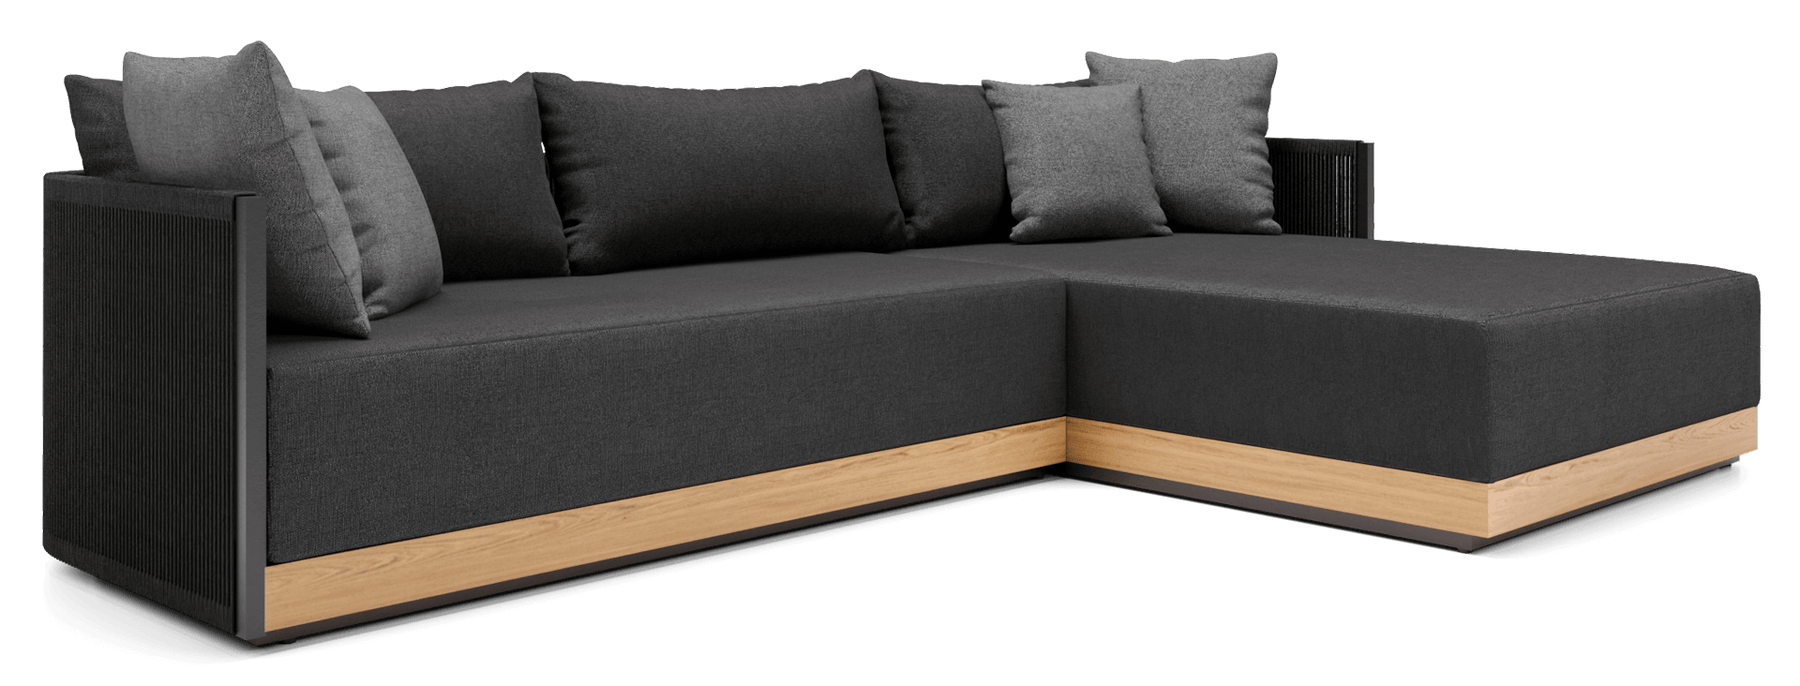 Clifton Sectional Sofa